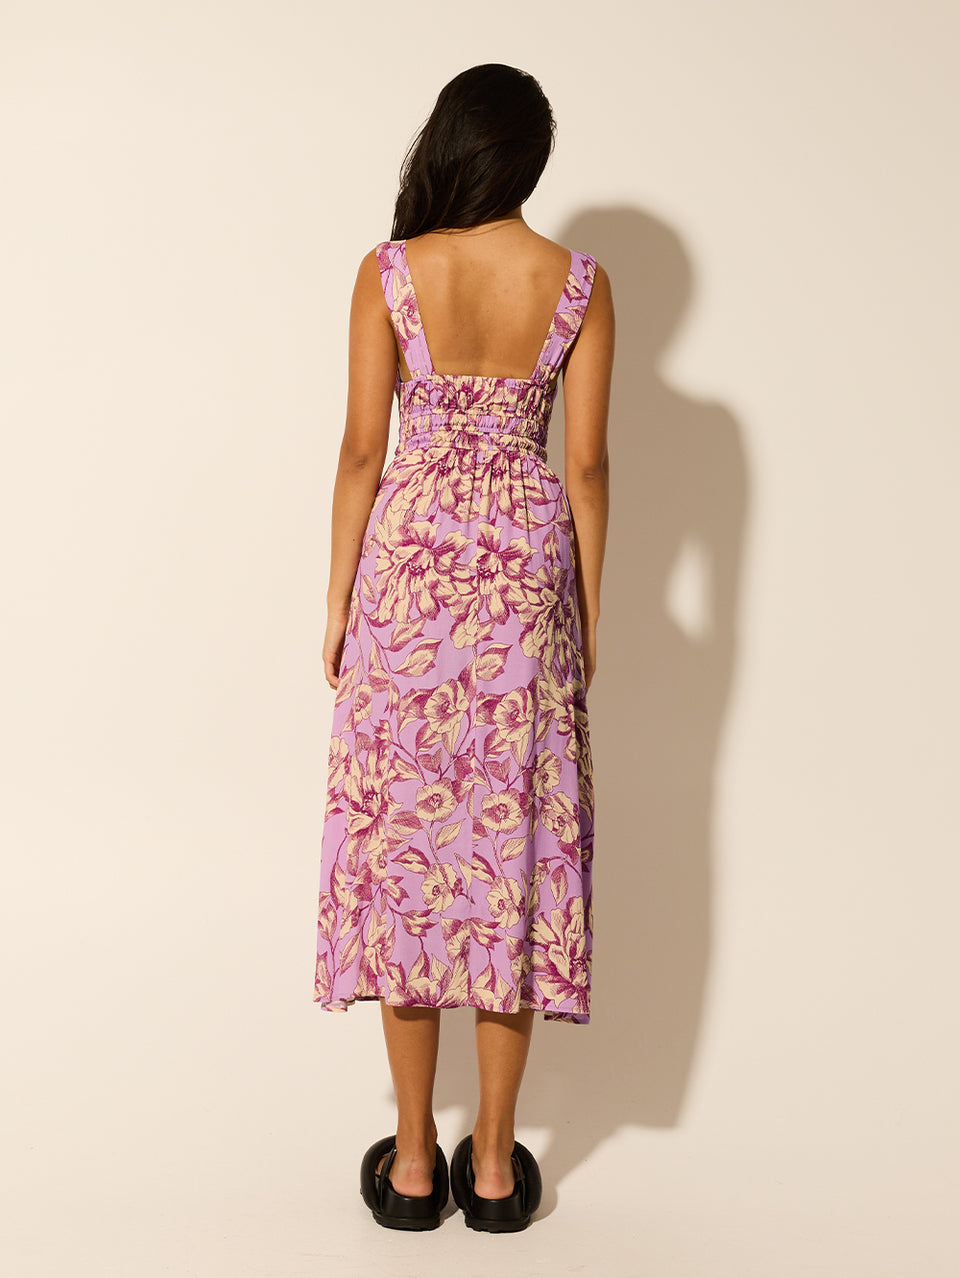 Reyna Strappy Midi Dress KIVARI | Model wears purple floral strappy midi dress back view